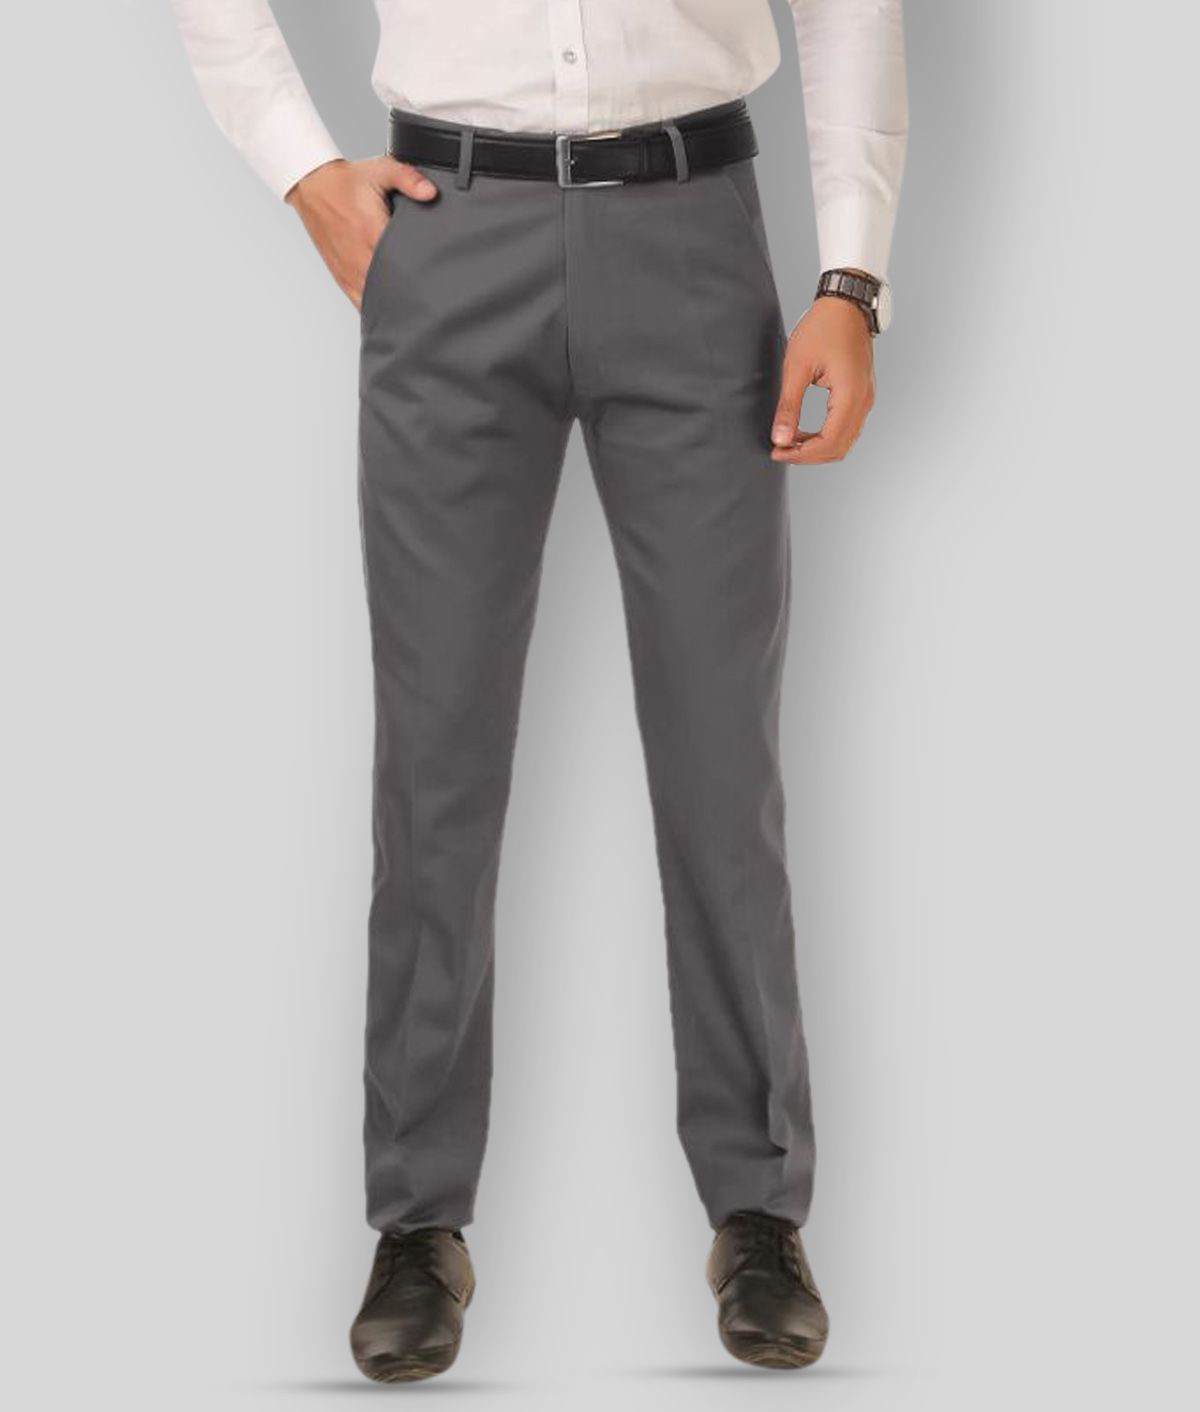     			Haul Chic - Dark Grey Polycotton Slim - Fit Men's Formal Pants ( Pack of 1 )